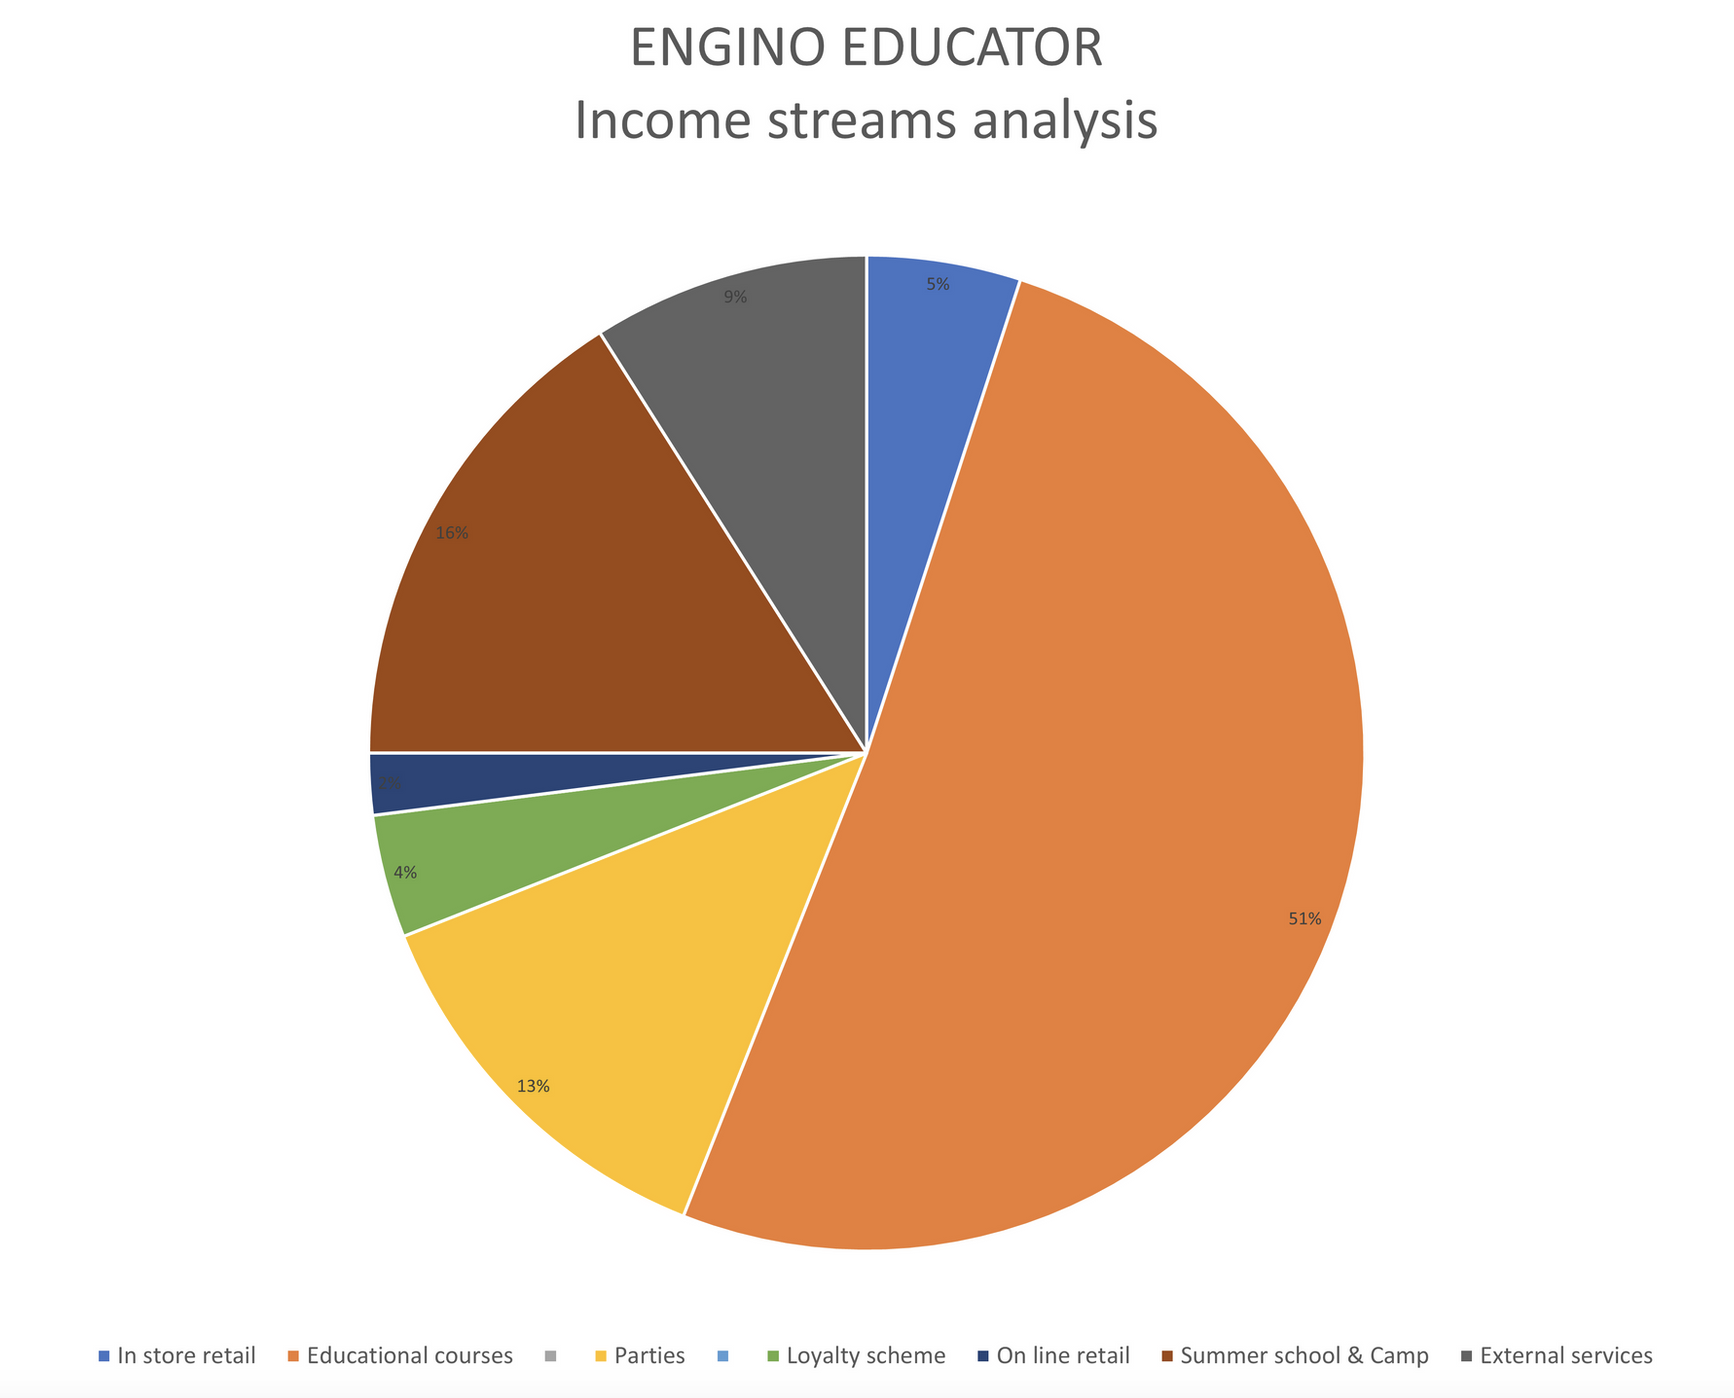 Engino educator income